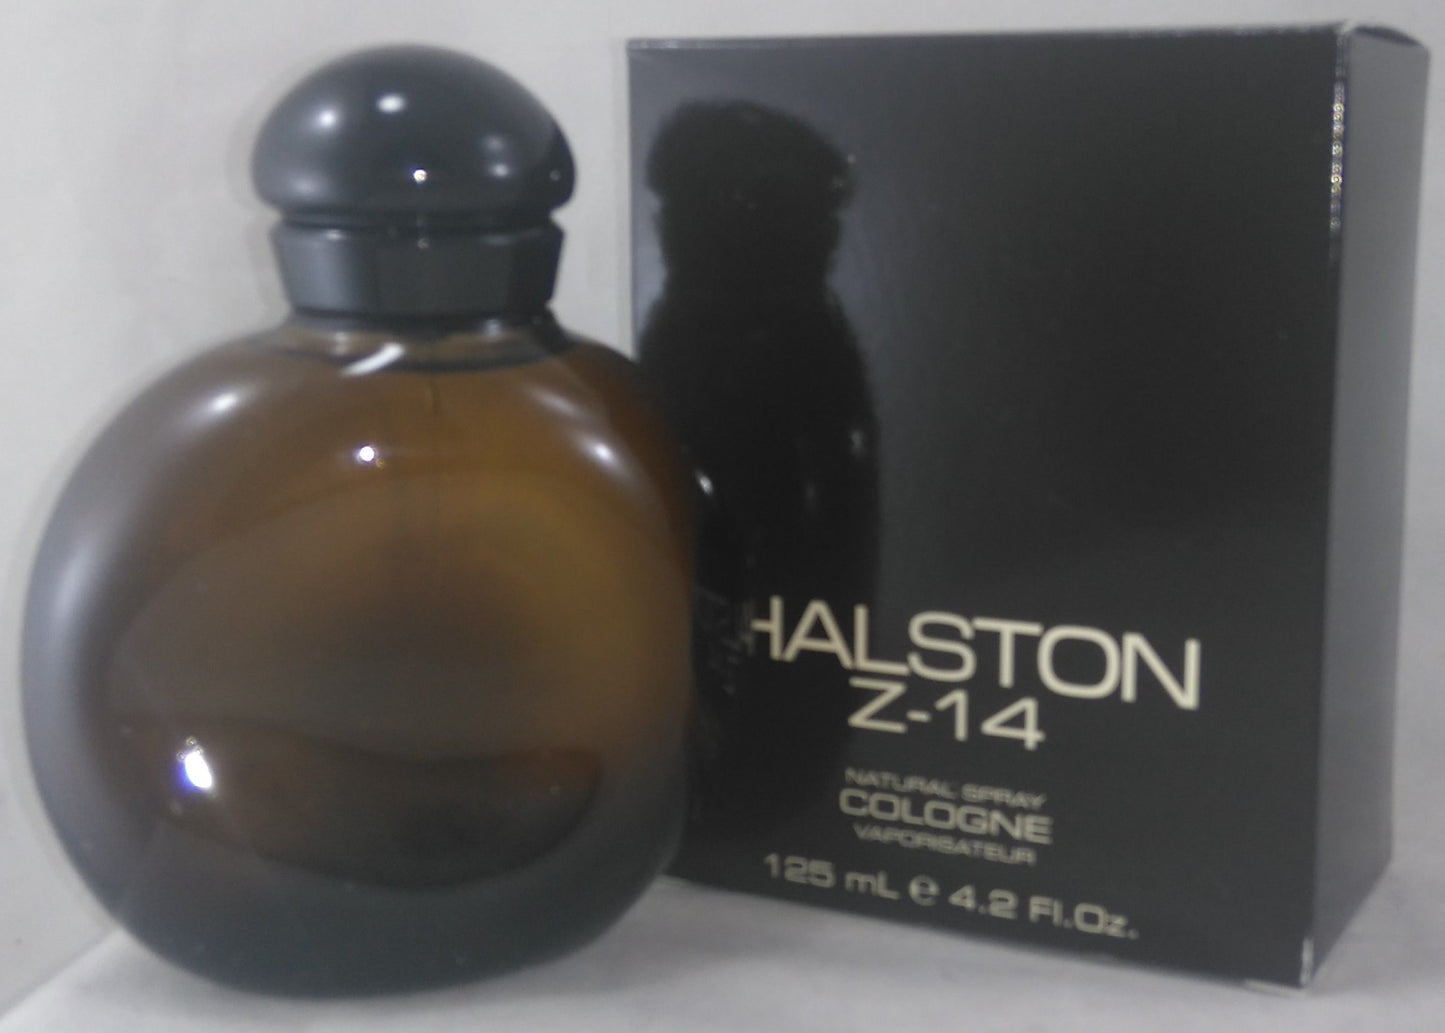 Halston Z-14 for Men, 125ml Cologne Spray